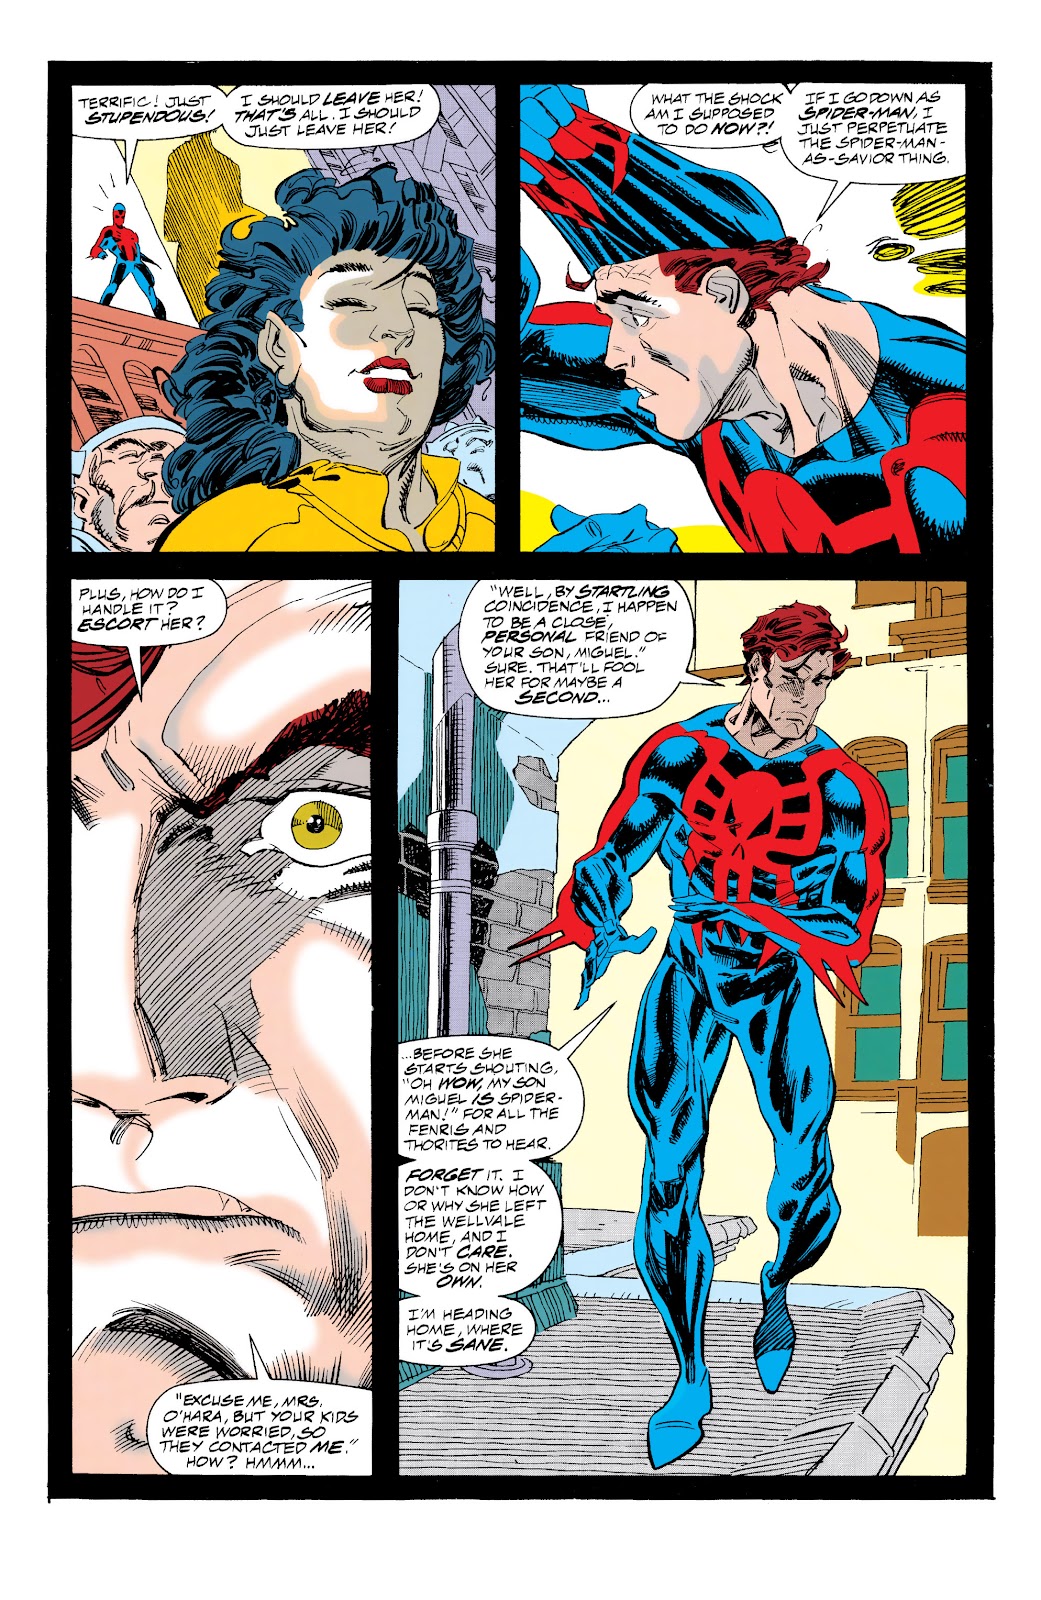 Spider-Man 2099 (1992) issue 17 - Page 10